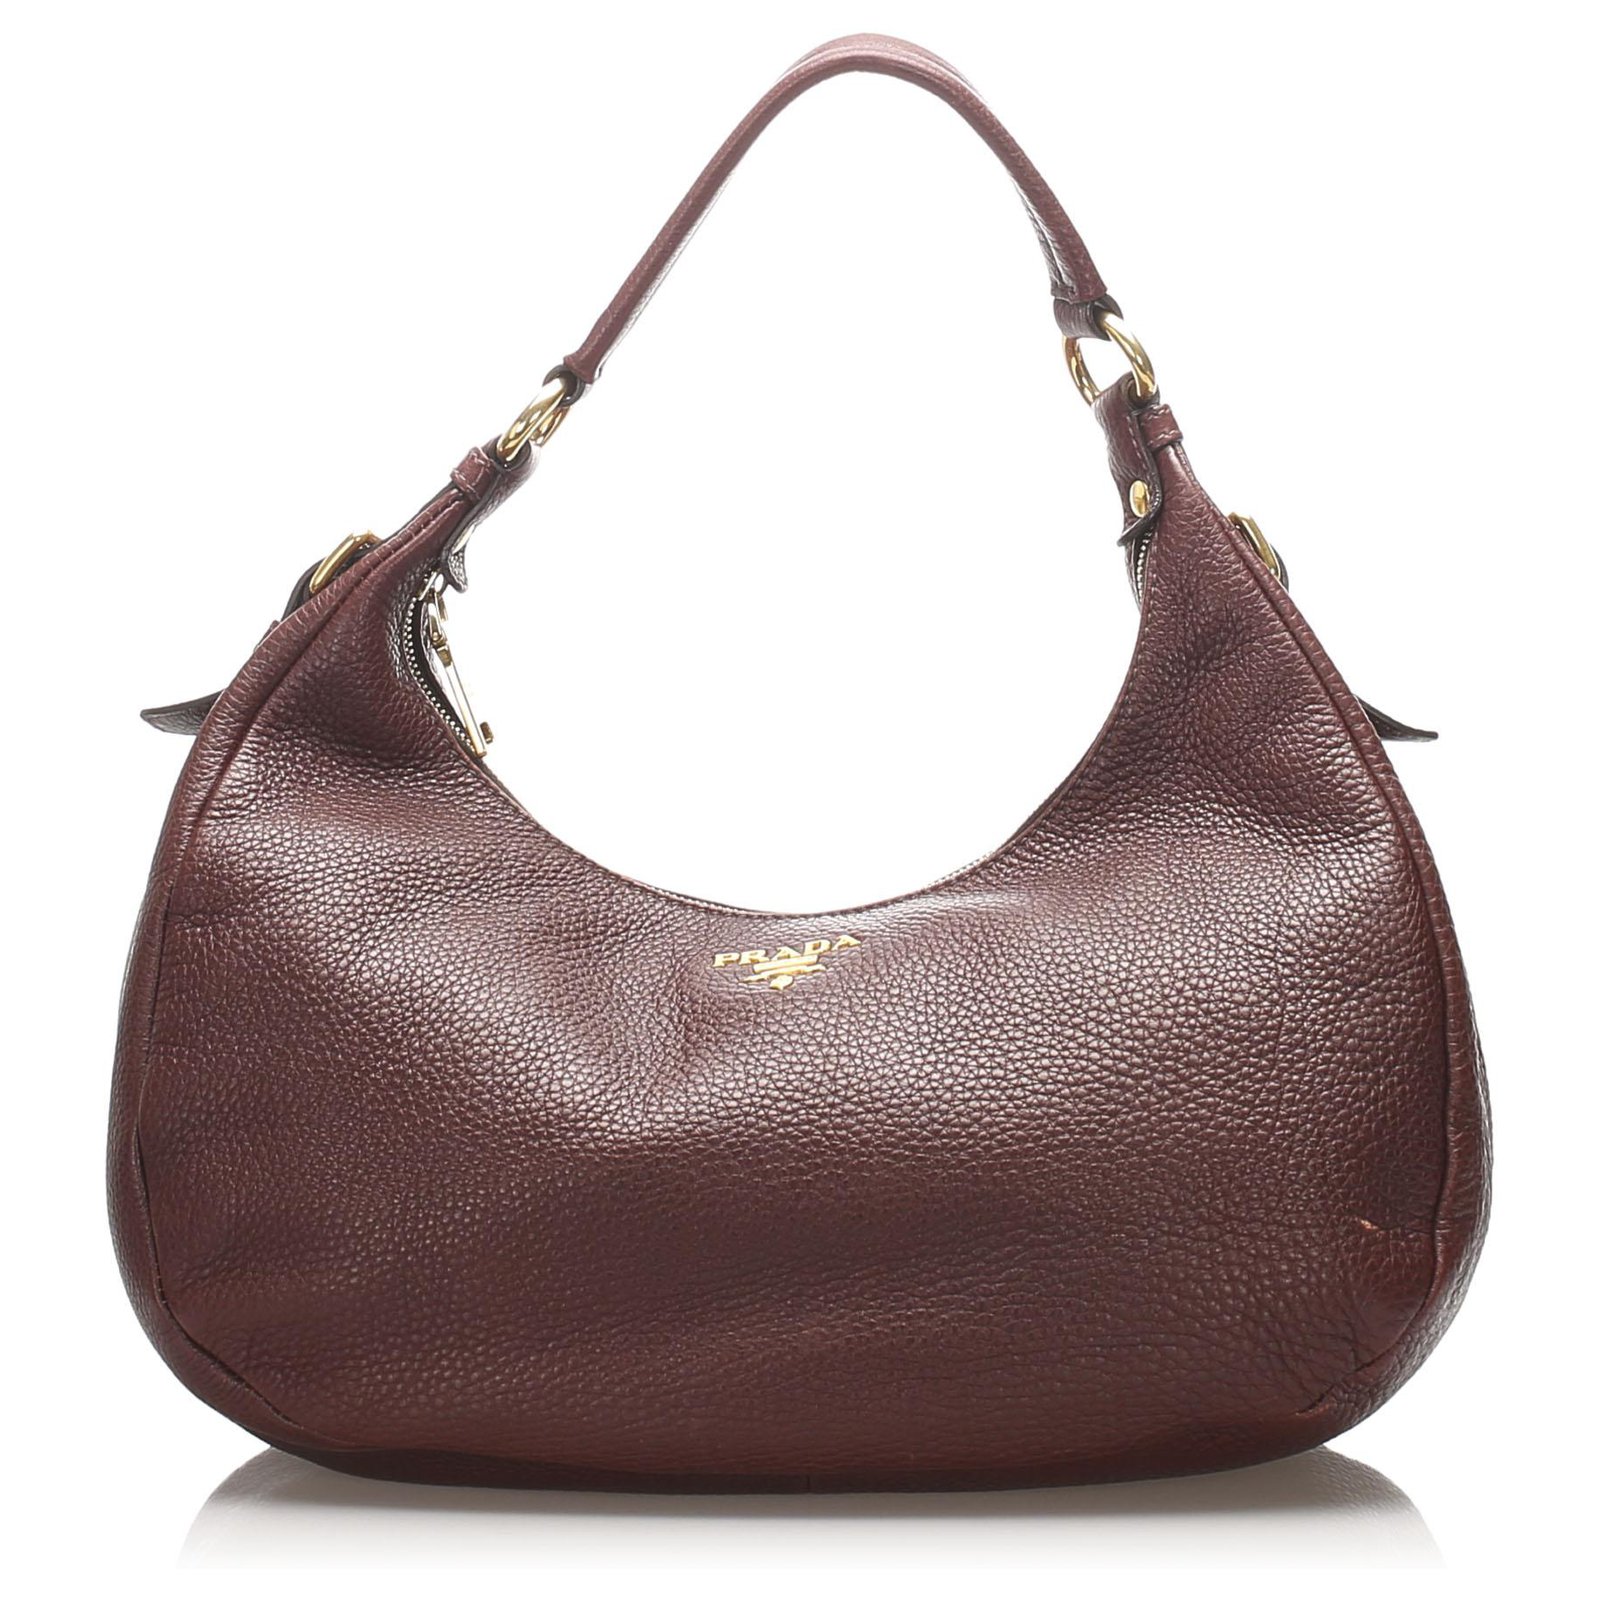 Prada Handbags Women | Paul Smith